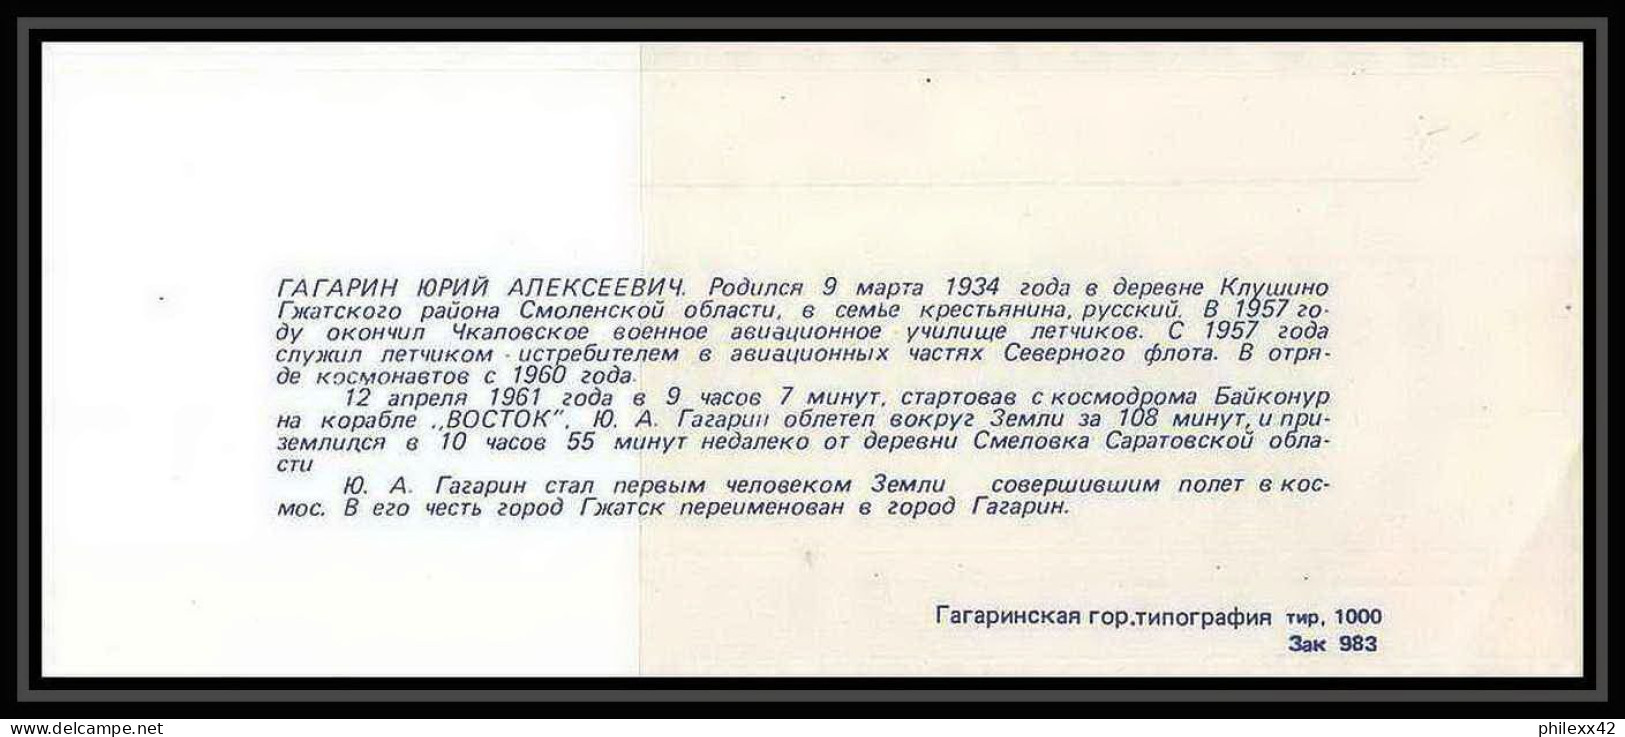 10299/ Espace (space Raumfahrt) Lettre (cover Briefe) 12/4/1991 Federation Aeronautique Gagarine Gagarin (urss USSR) - Russie & URSS